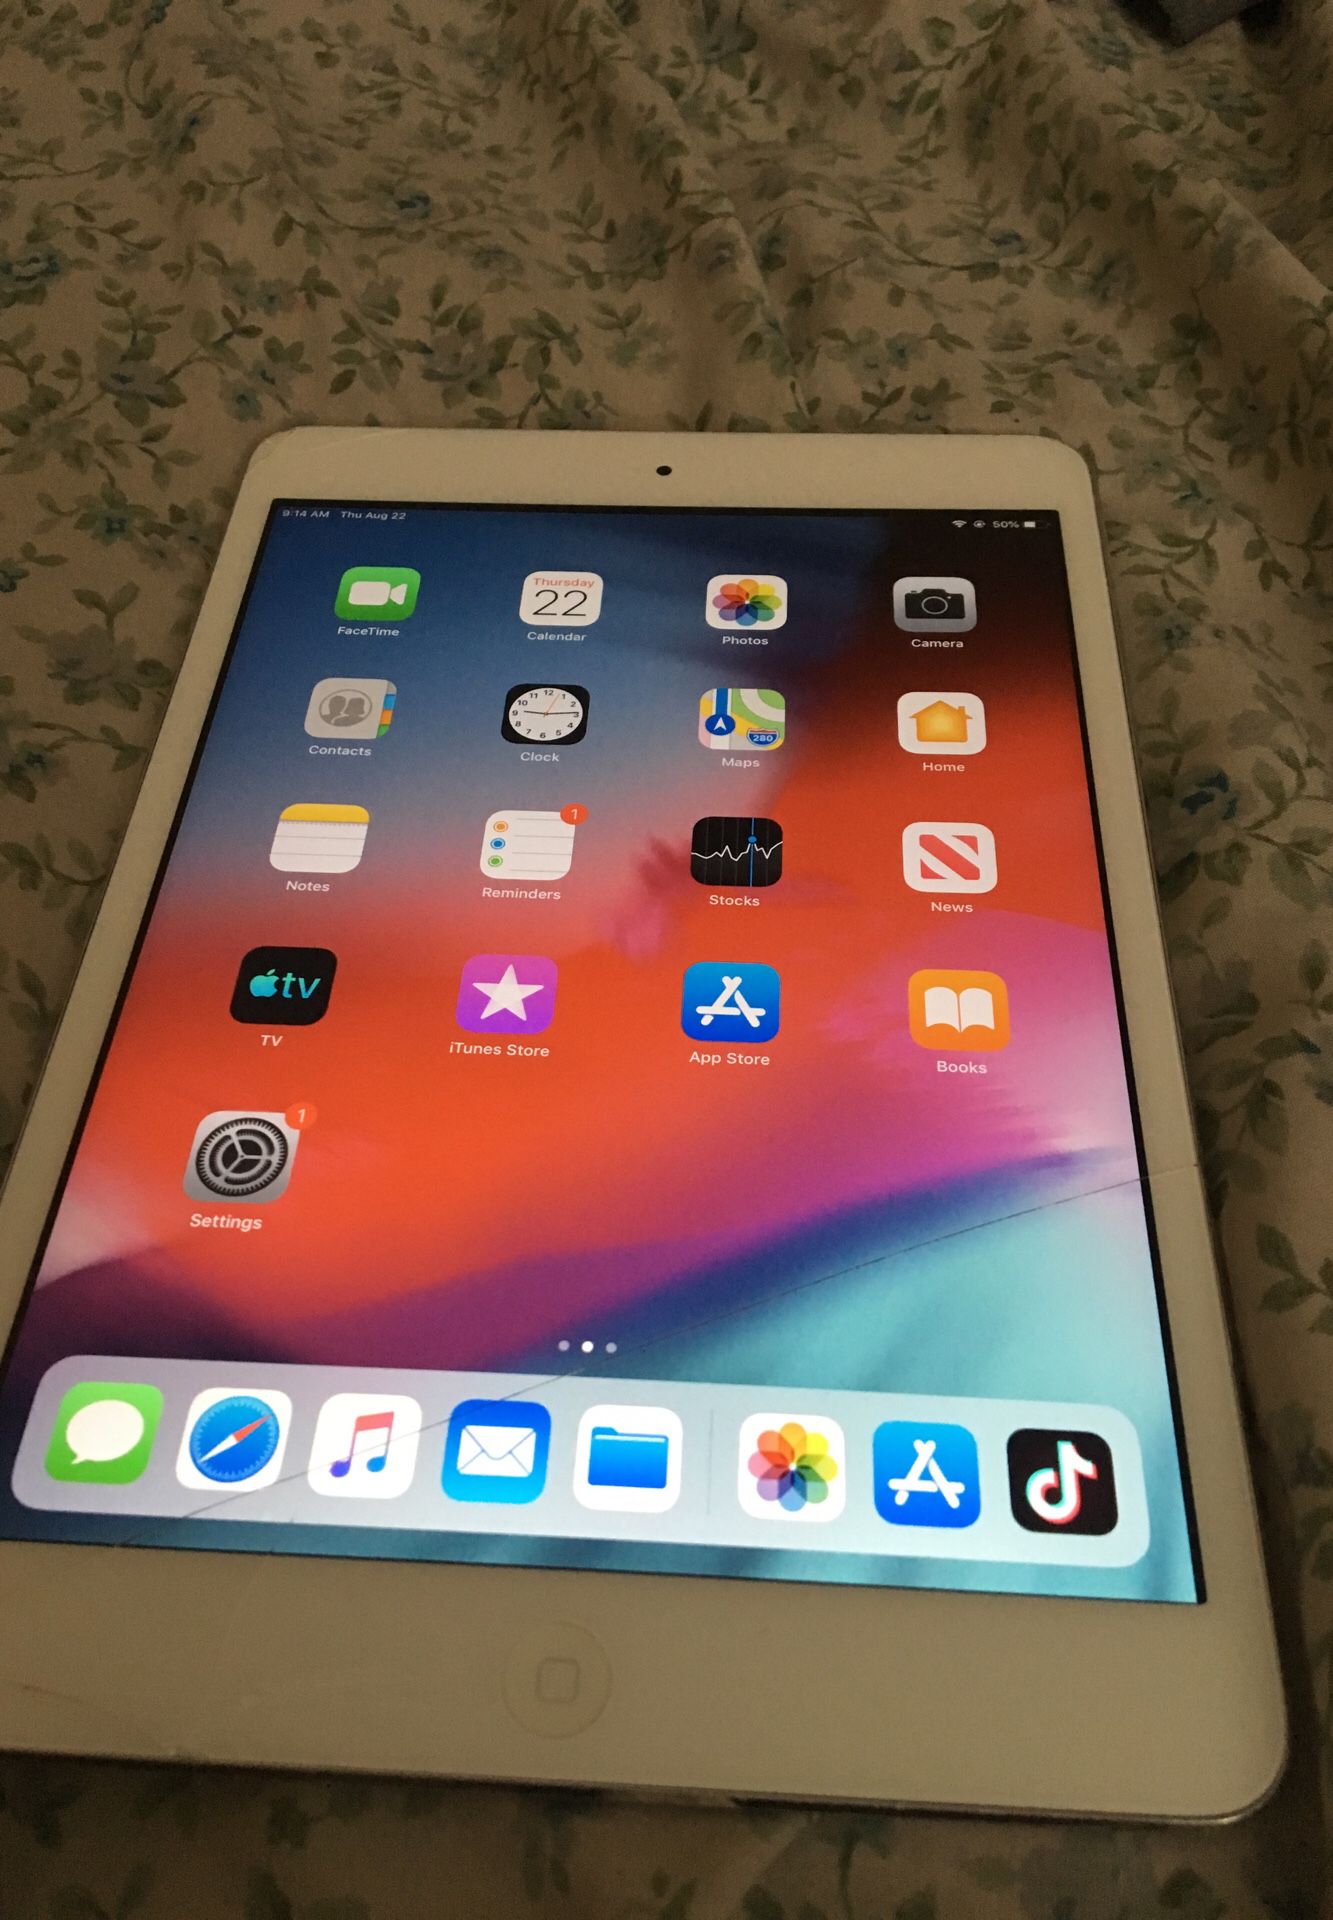 Apple iPad Mini 2 generation